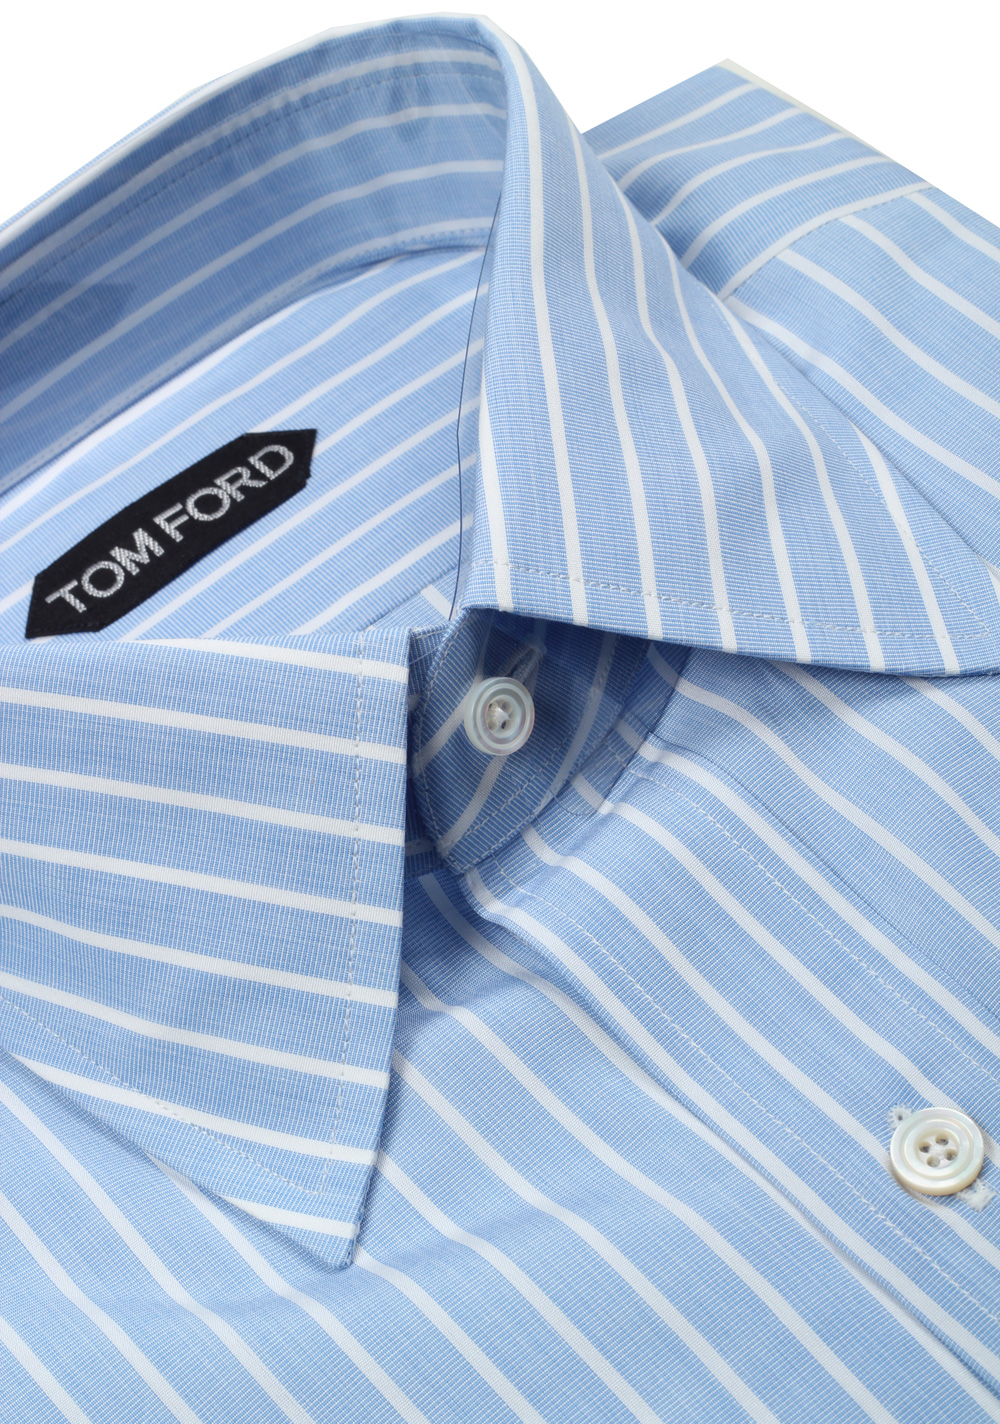 TOM FORD Striped White Blue Dress Shirt Size 40 / 15,75 U.S. | Costume ...